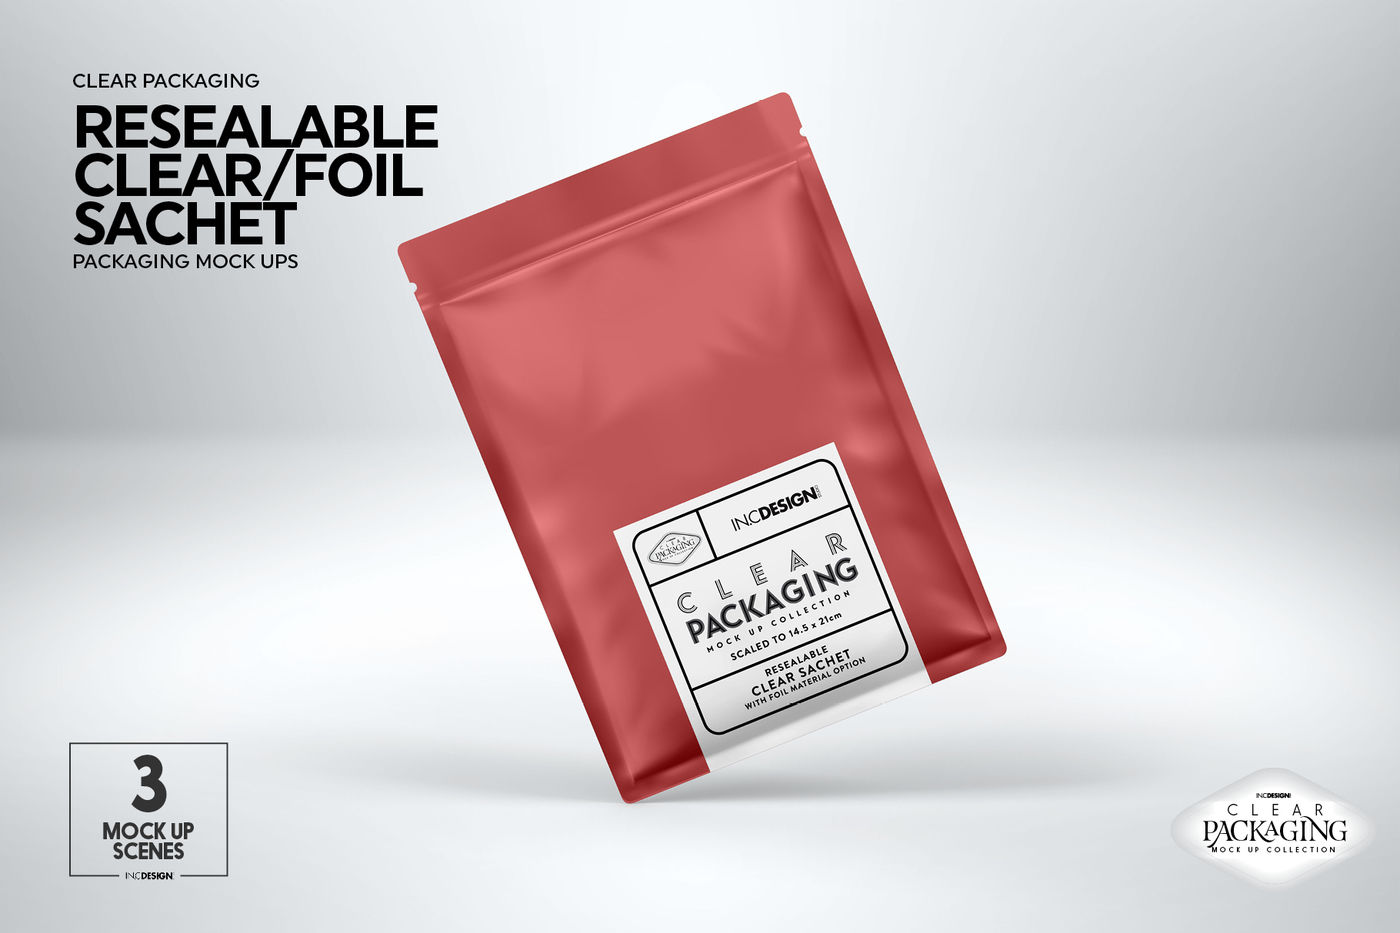 Download Free Clear Foil Sachet Packaging Mockup By Inc Design Studio Thehungryjpeg Com PSD Mockups.